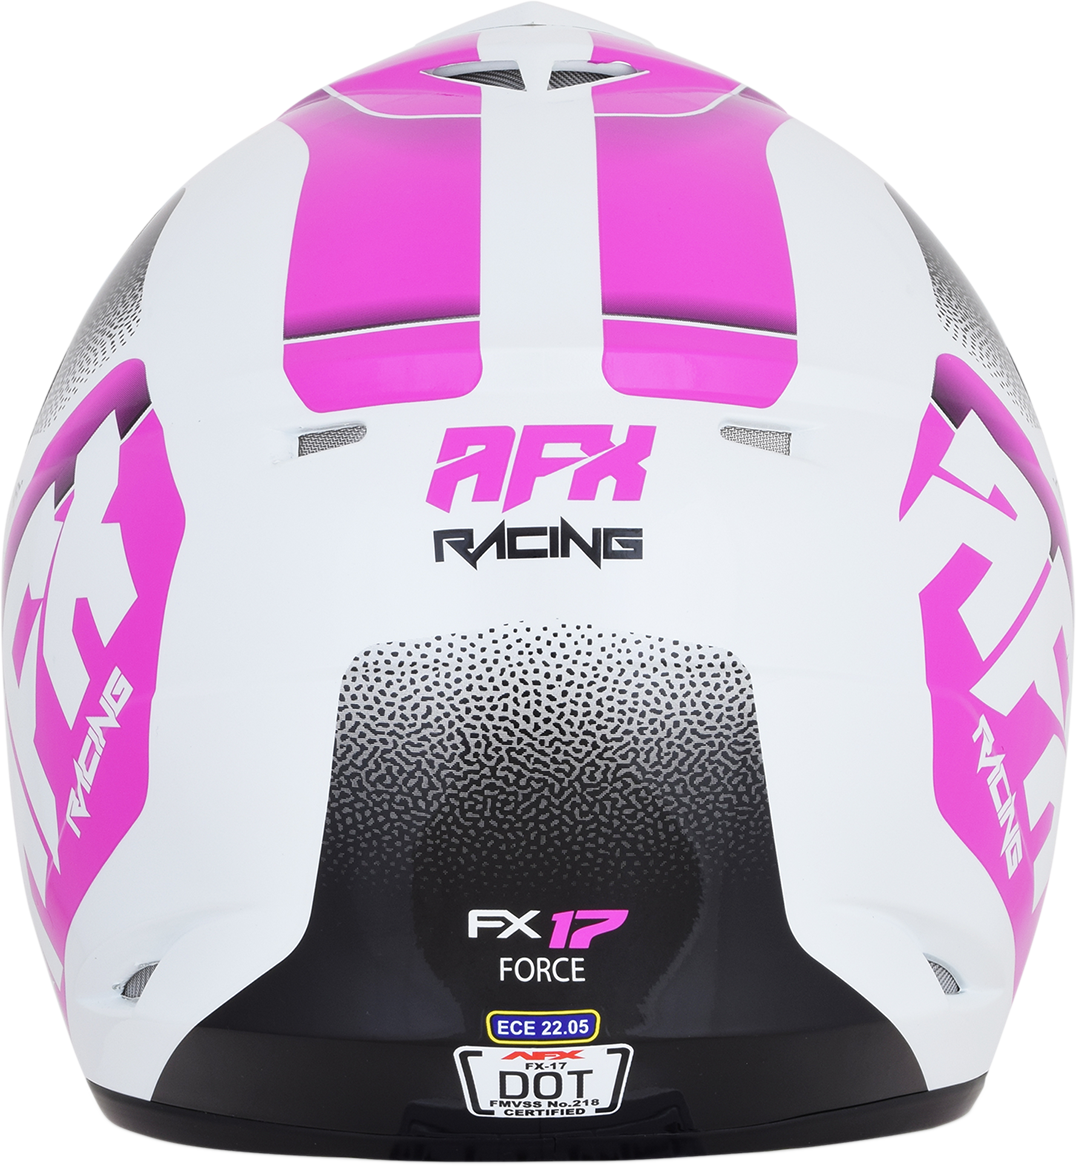 AFX FX-17 Helmet - Force - Pearl White/Fuchsia - XS 0110-5255